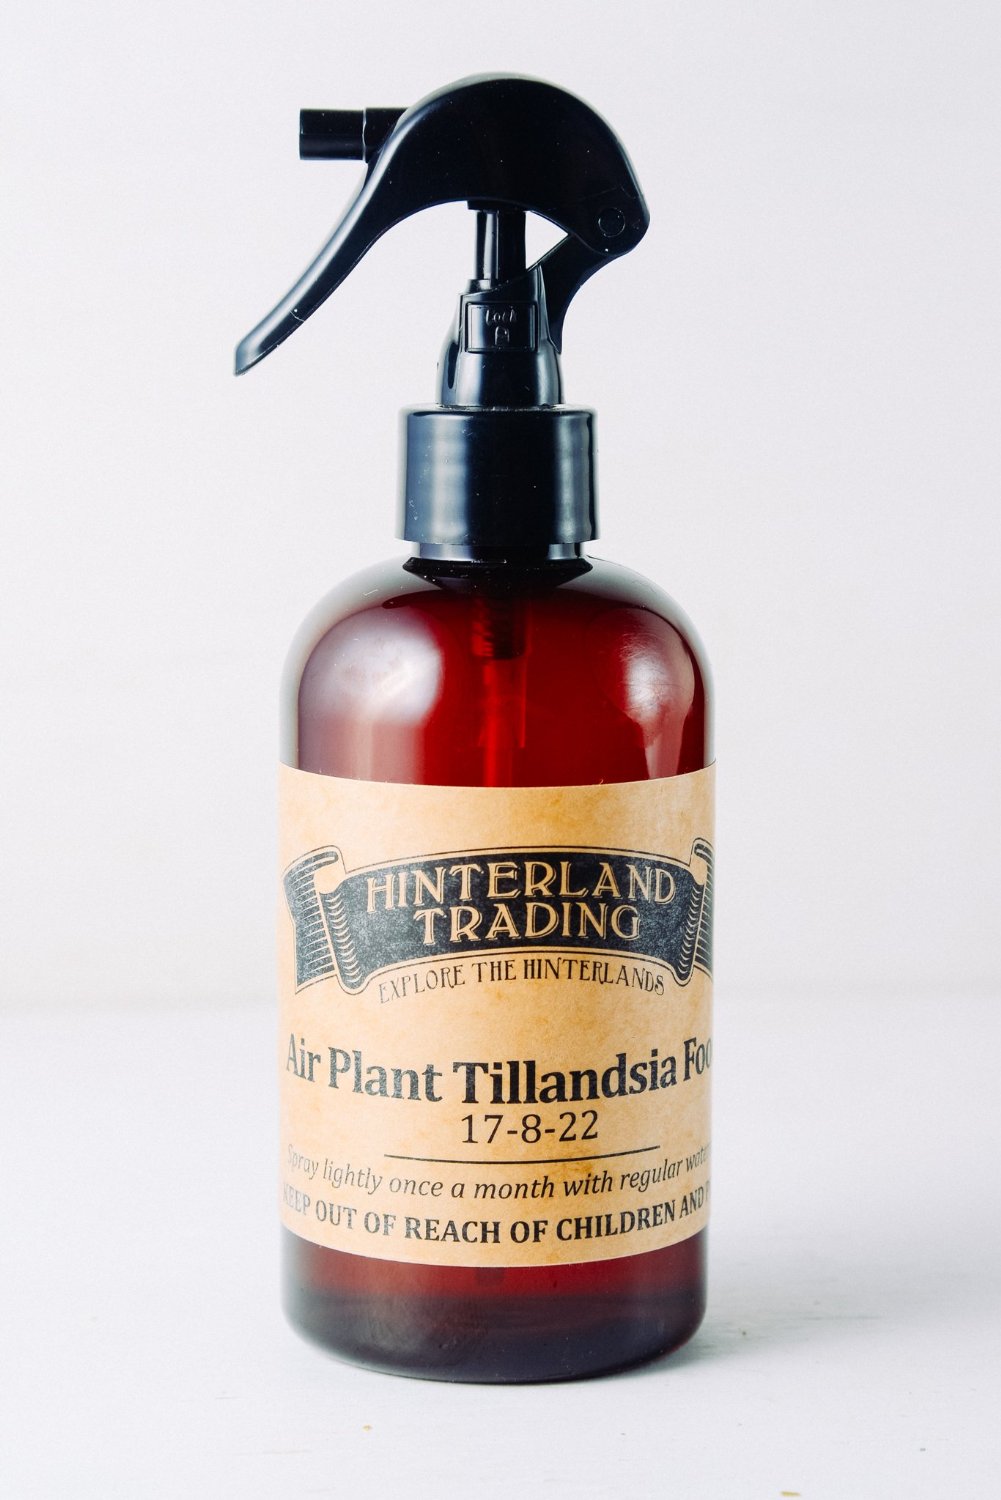 Review of Hinterland Trading Air Plant Tillandsia Food Air Plants Fertilizer 17-8-22